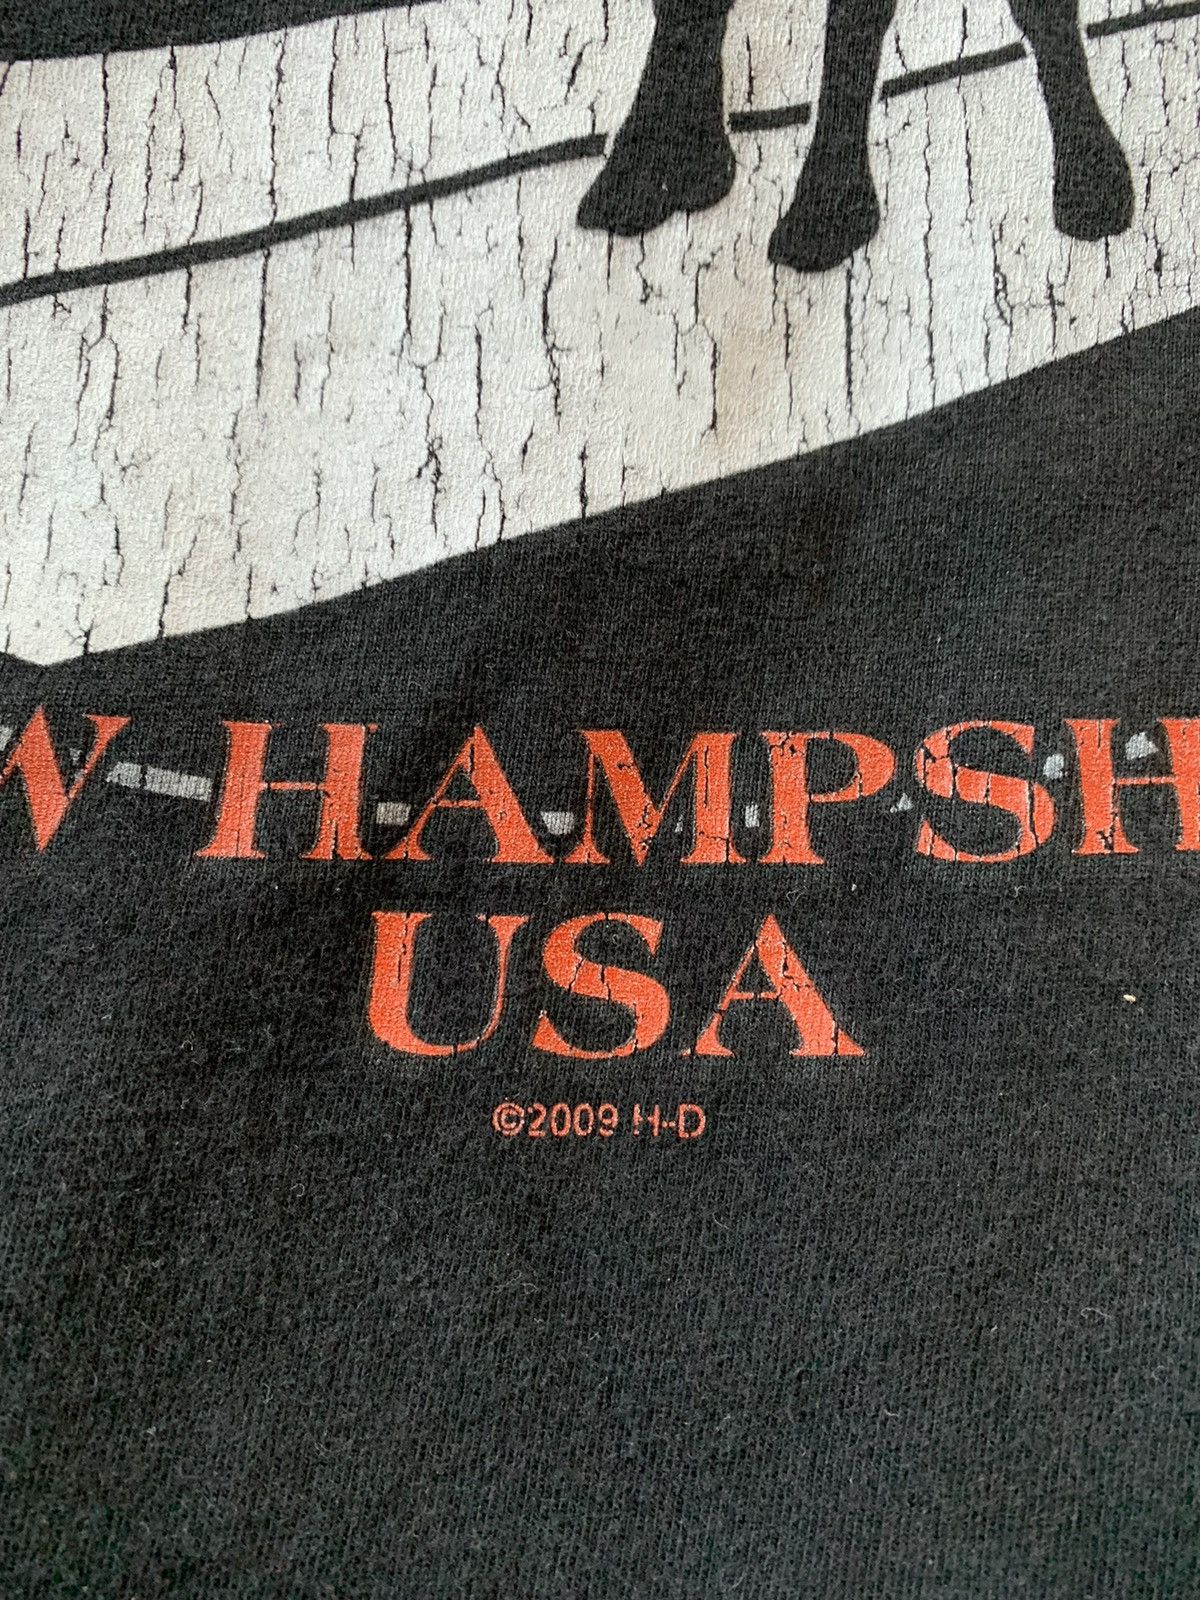 Vintage 2009 Harley Davidson White Mountain Moose Black T-Shirt Size US L / EU 52-54 / 3 - 6 Thumbnail